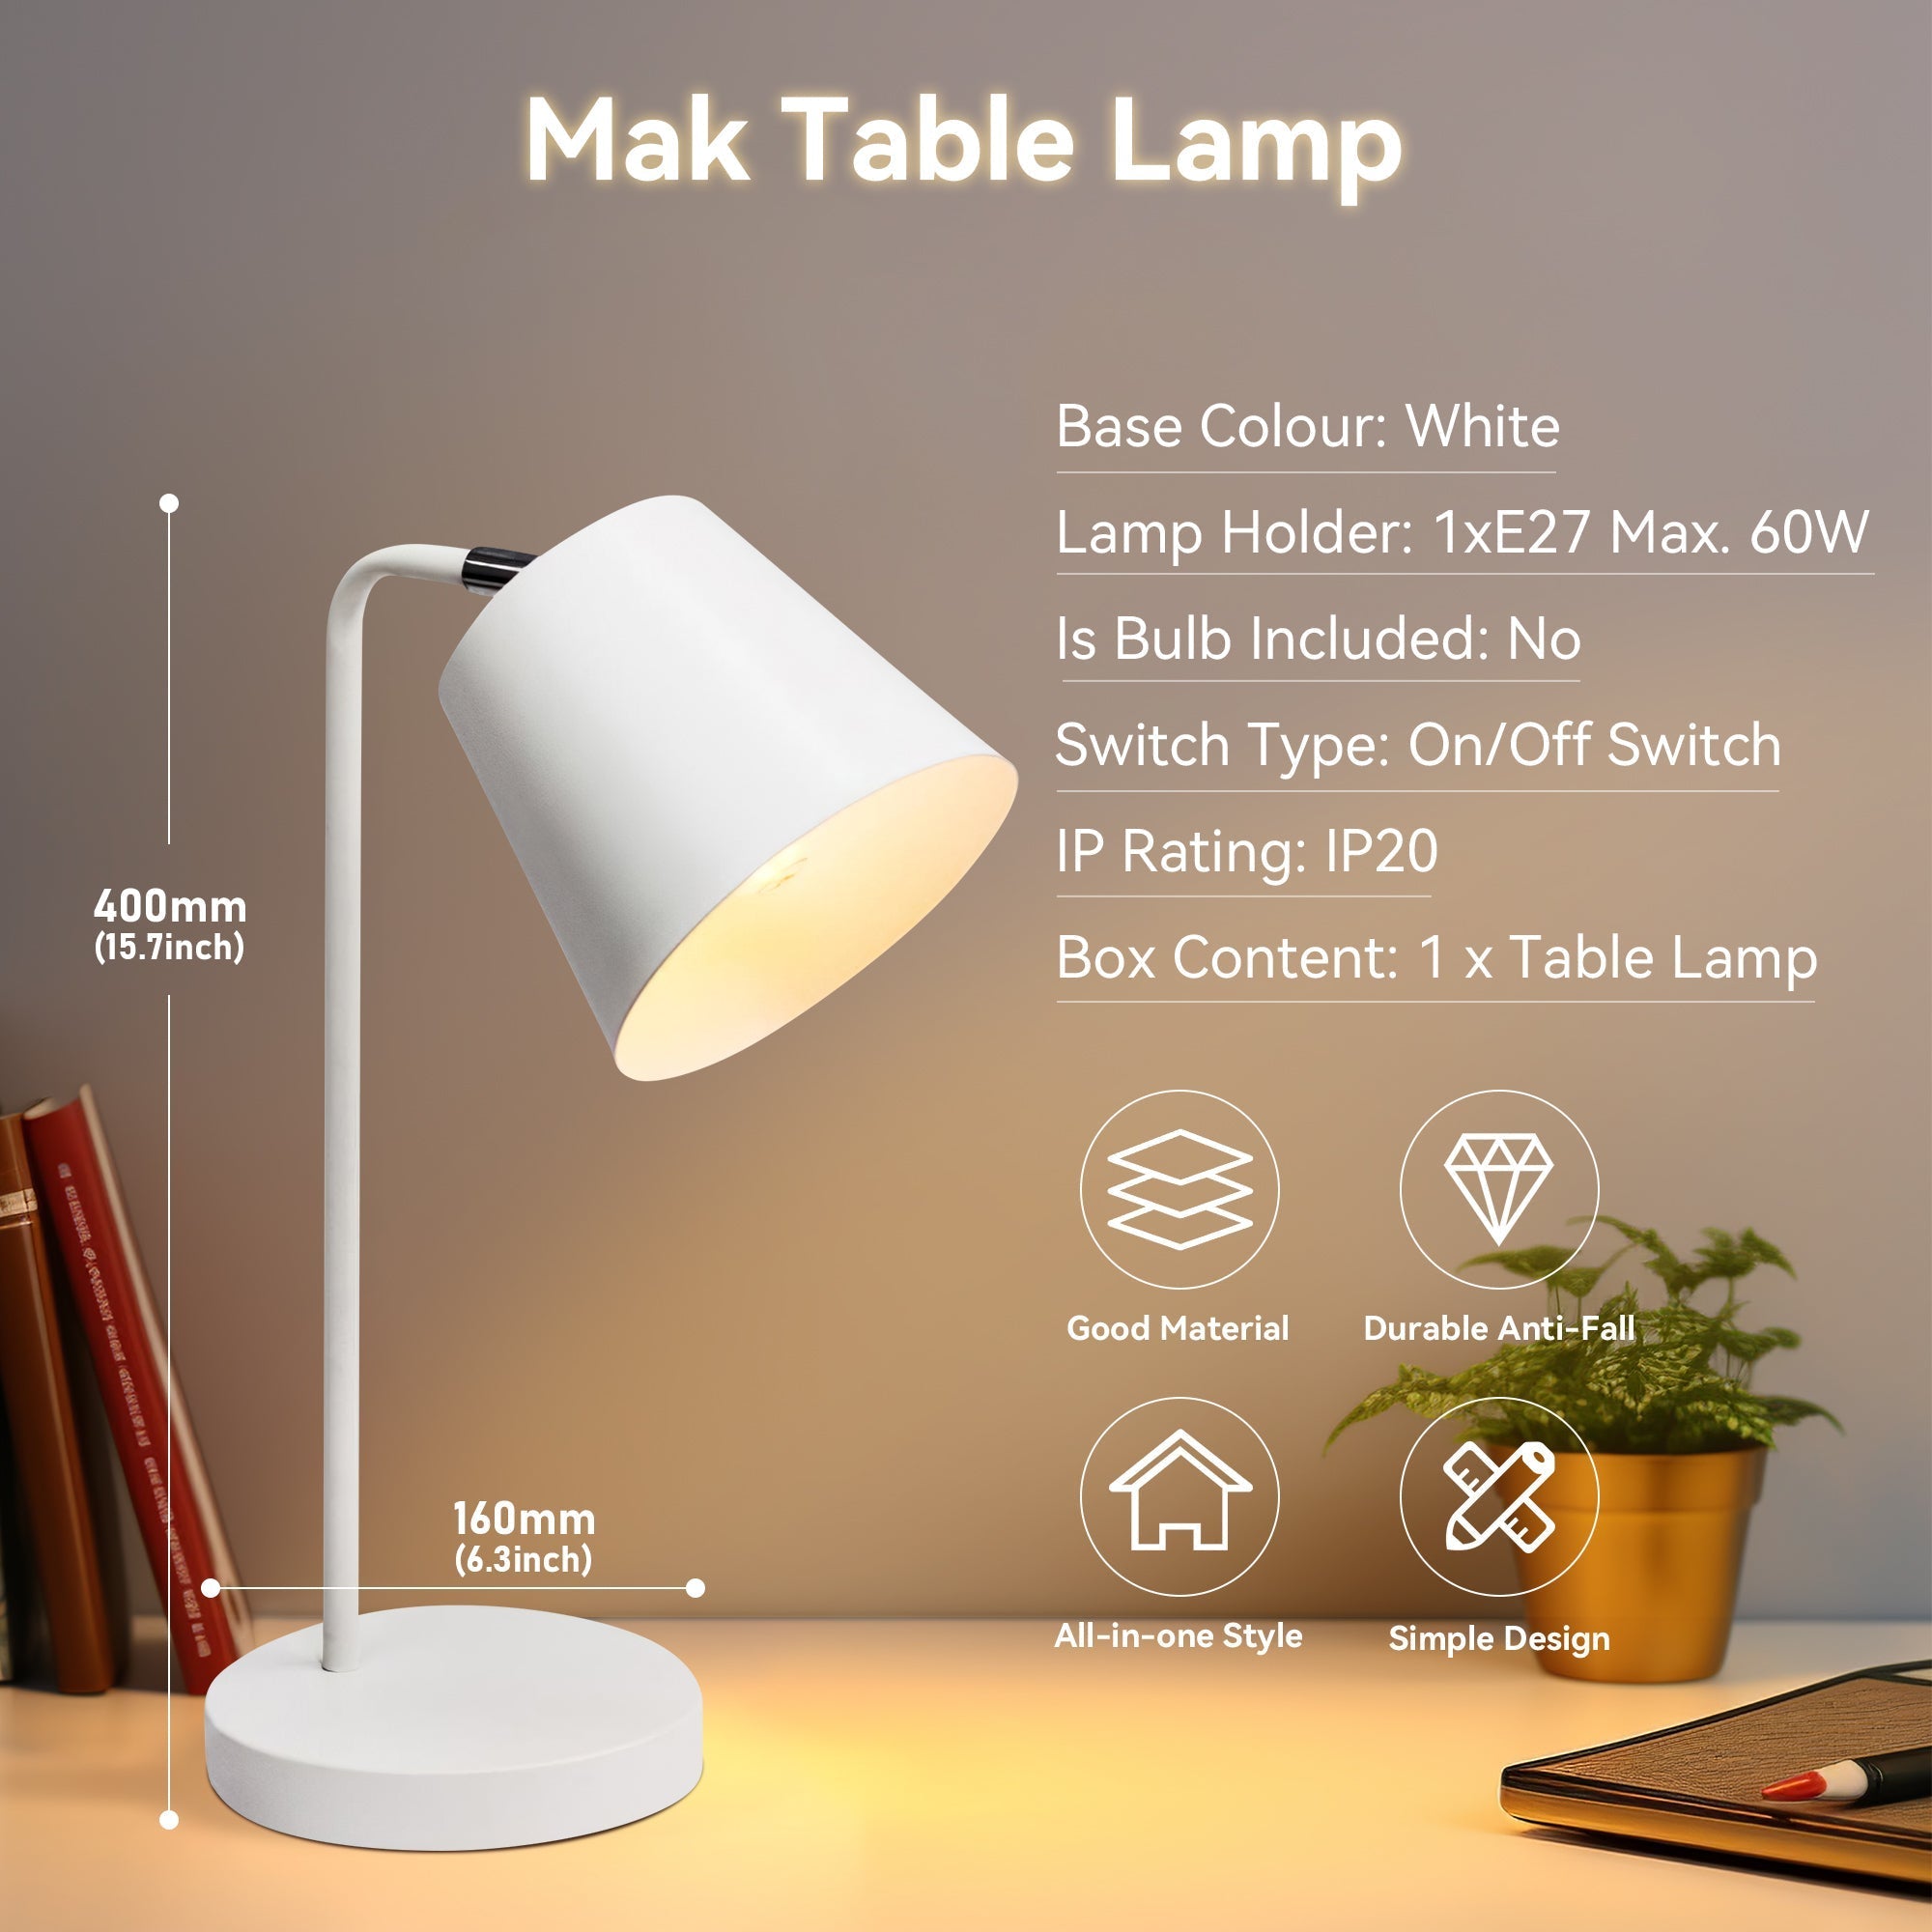 Mak Table Lamp - White